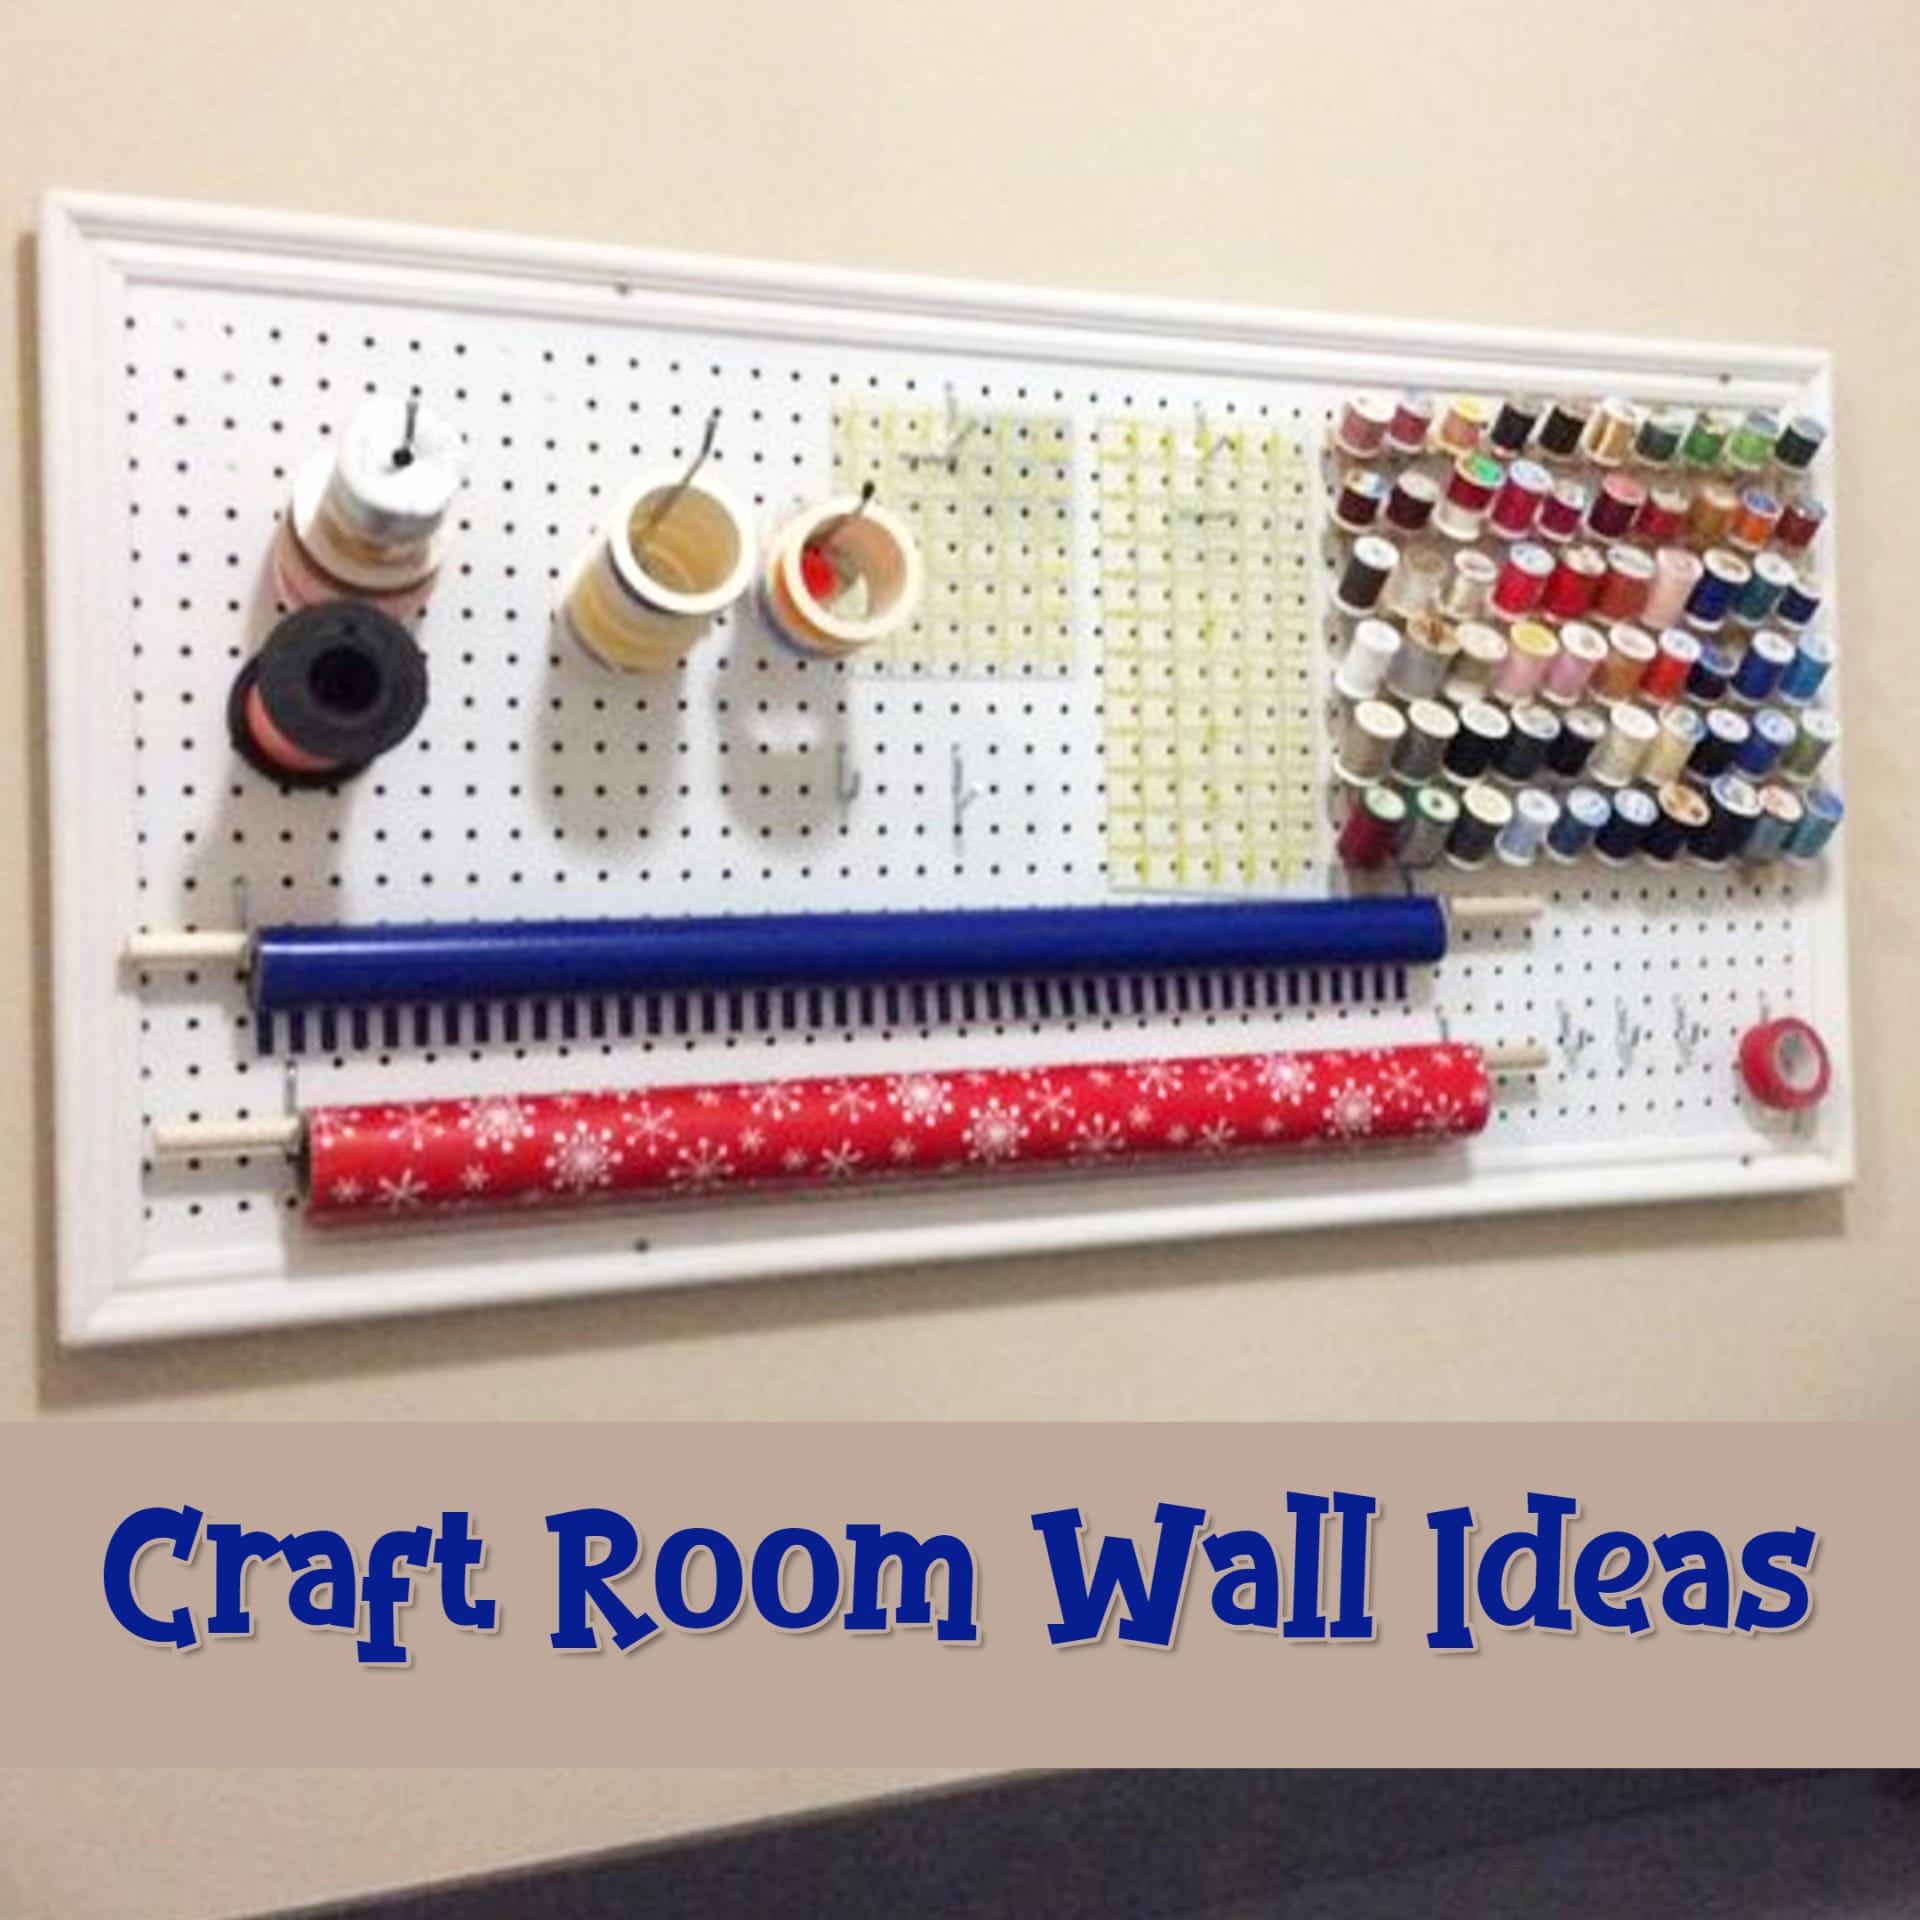 DIY craft room organization on a budget - cheap ideas for organizing your craft room - craft room ideas - craft room wall storage and organization ideas on a budget